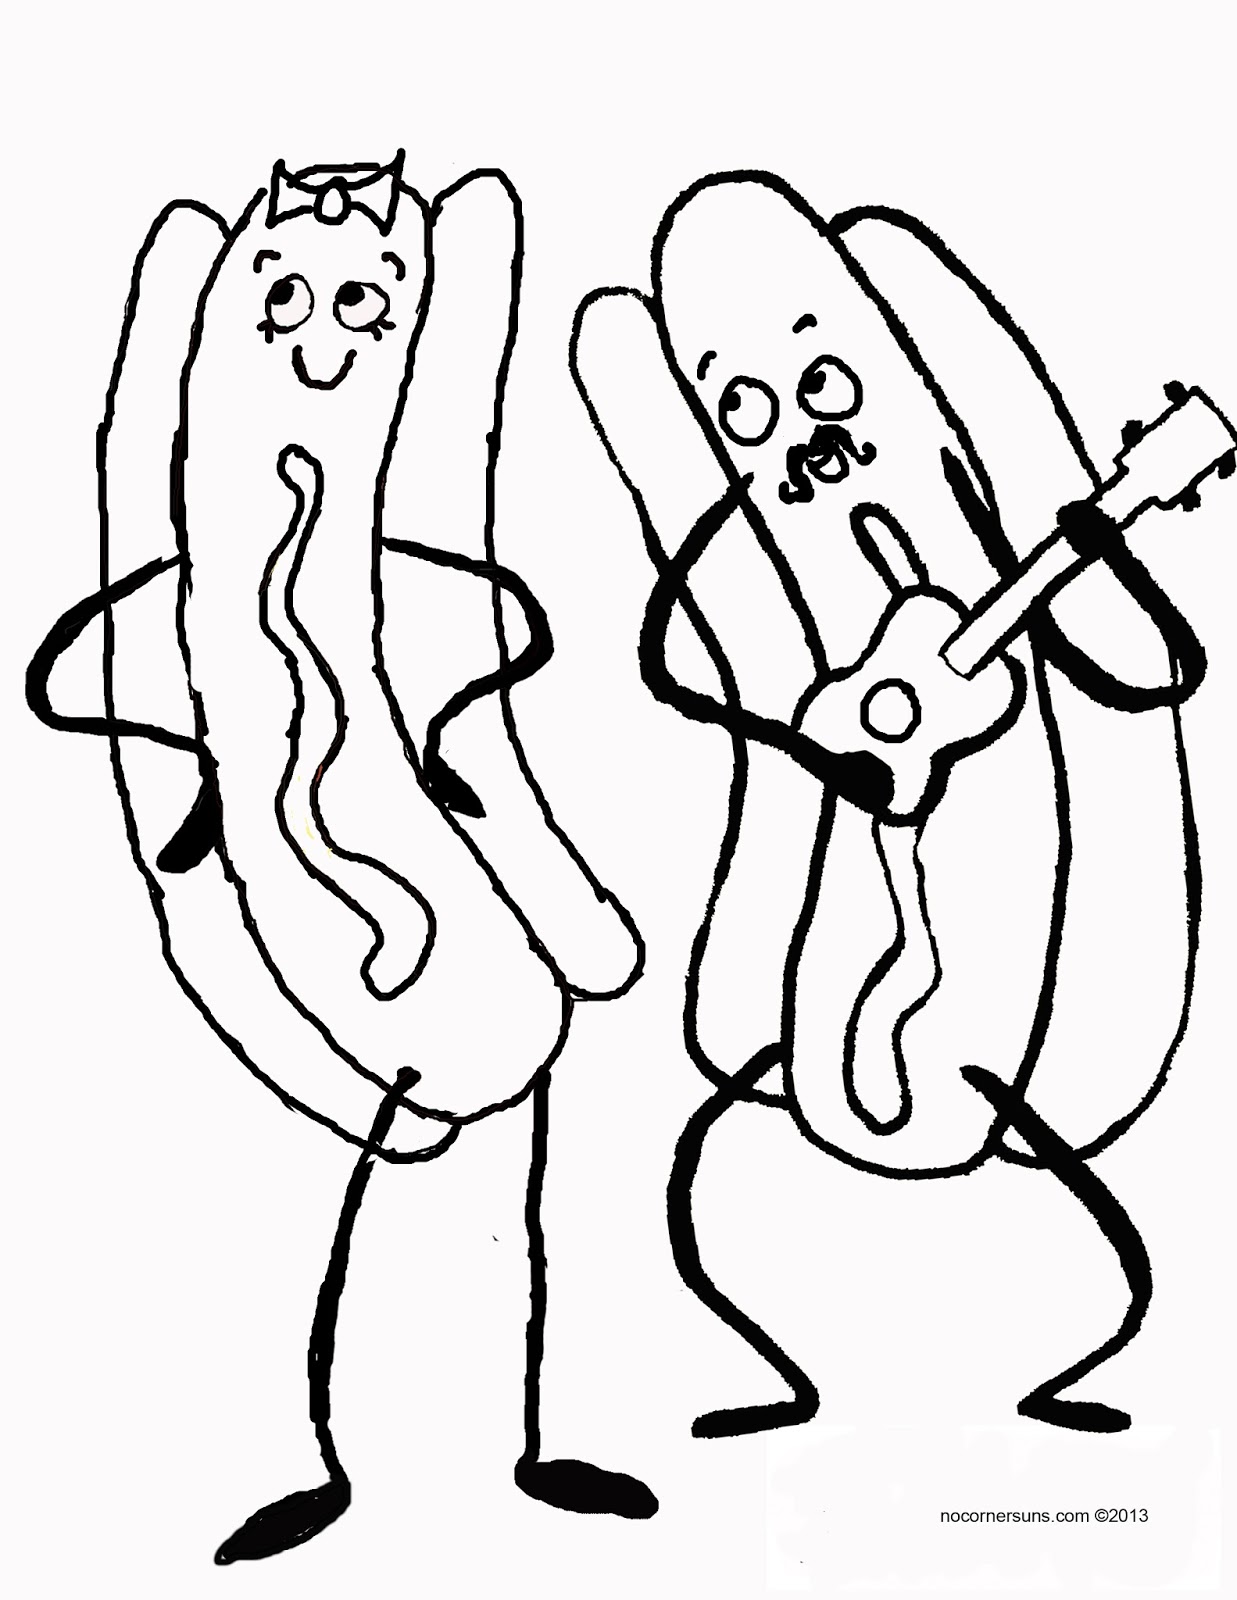 No Corner Suns: Girl and Boy Hot Dog Coloring Page